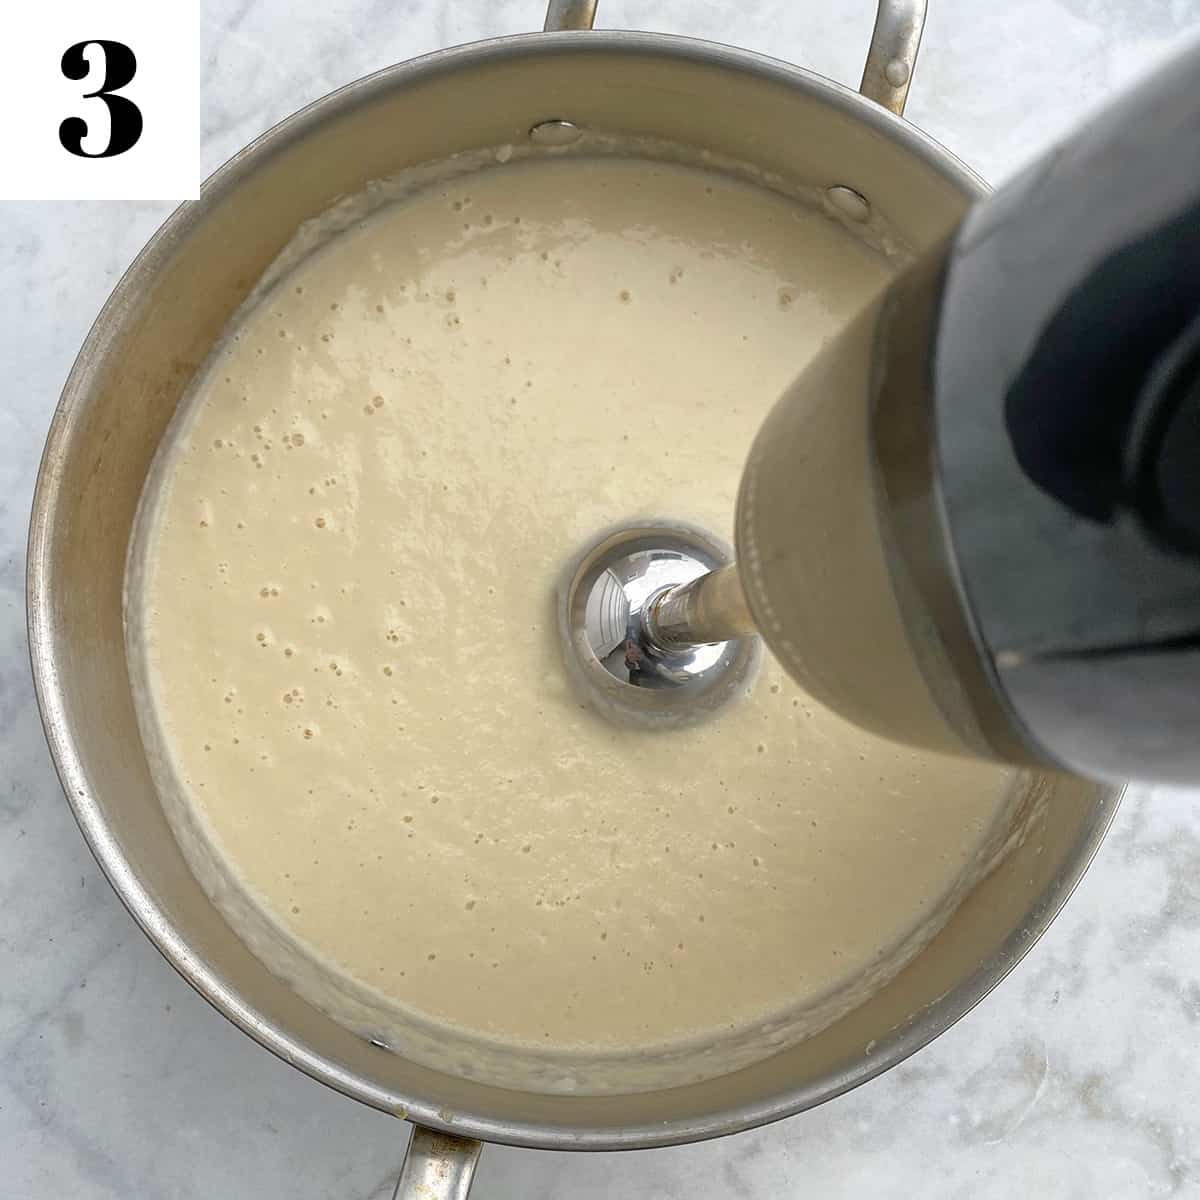 immersion blender blending sauce in large pan.